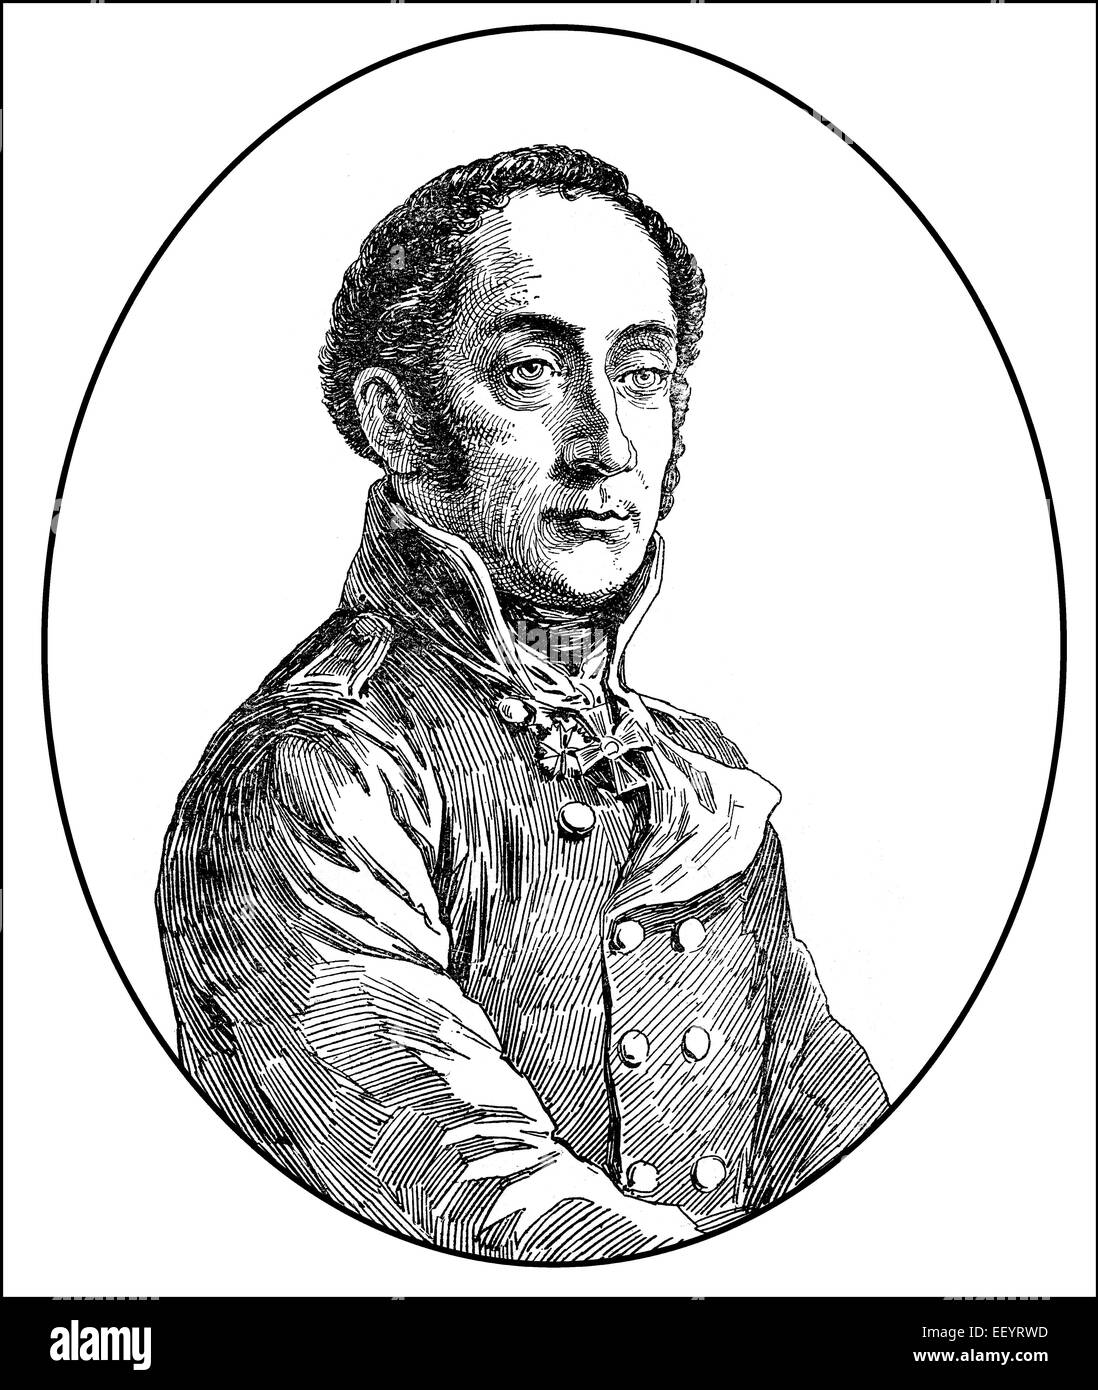 Bogislav Friedrich Emanuel Graf Tauentzien von Wittenberg, 1760 - 1824, a Prussian general of the Napoleonic Wars, Stock Photo